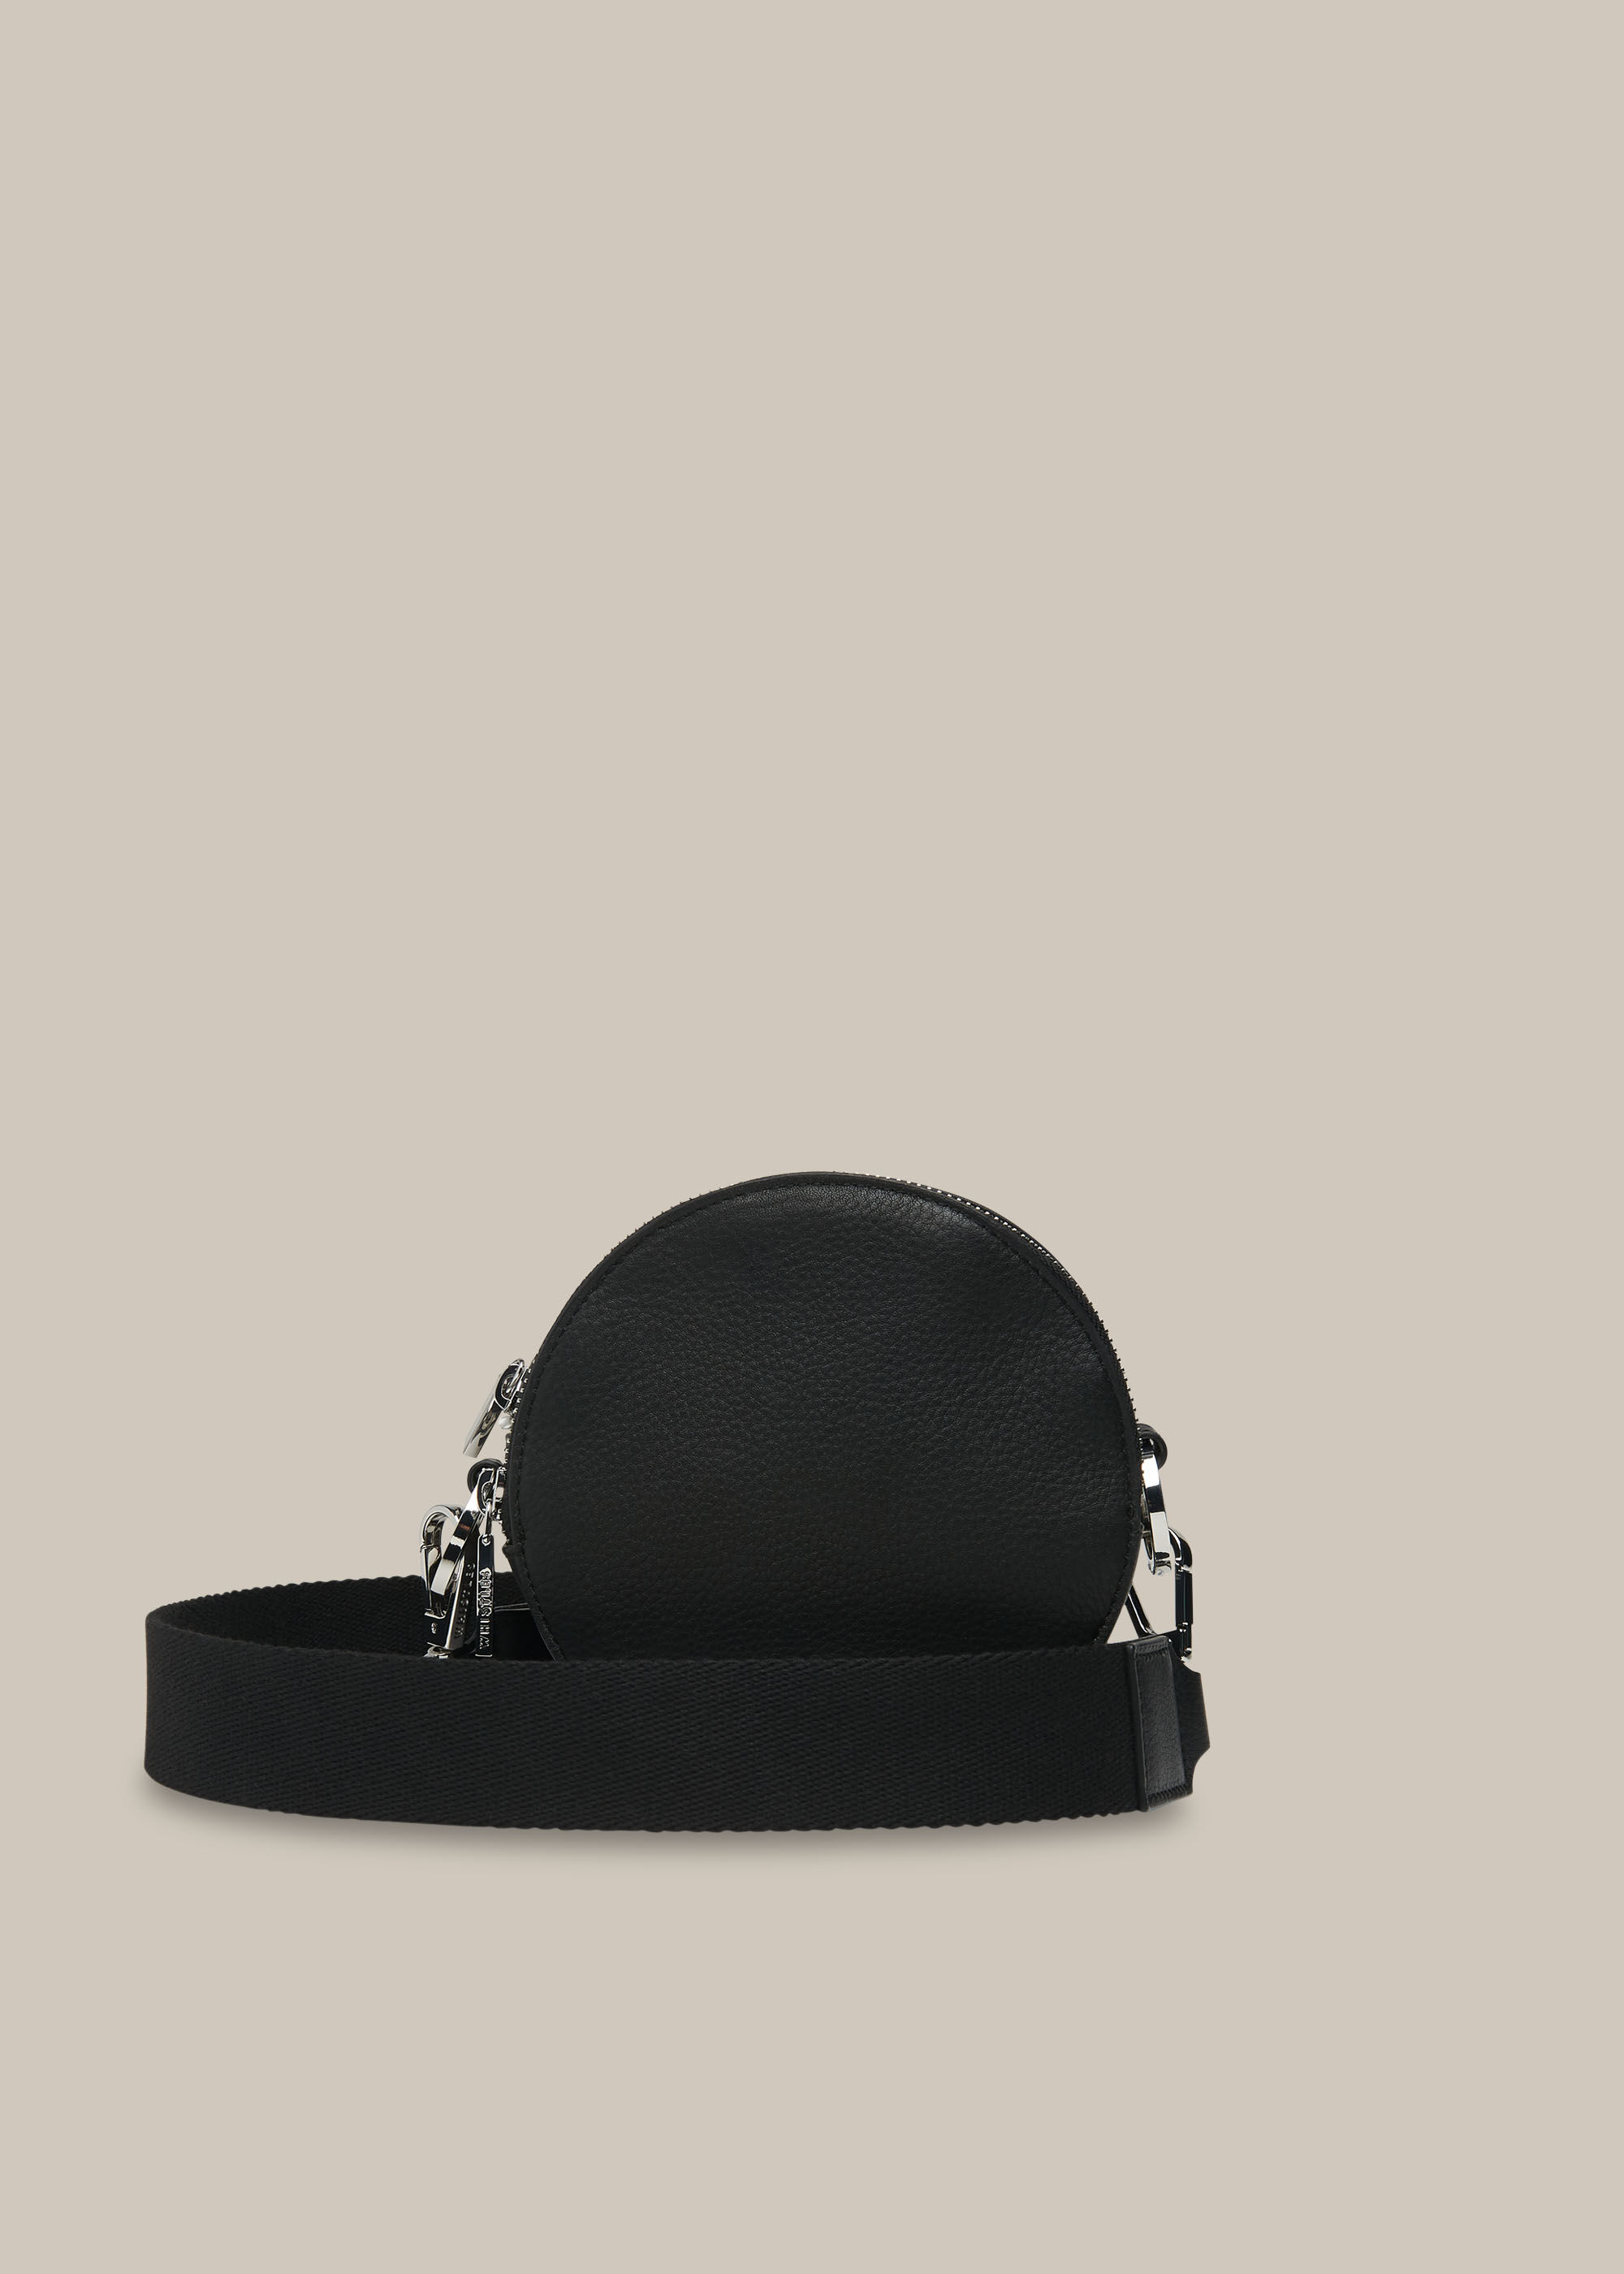 round black leather crossbody bag